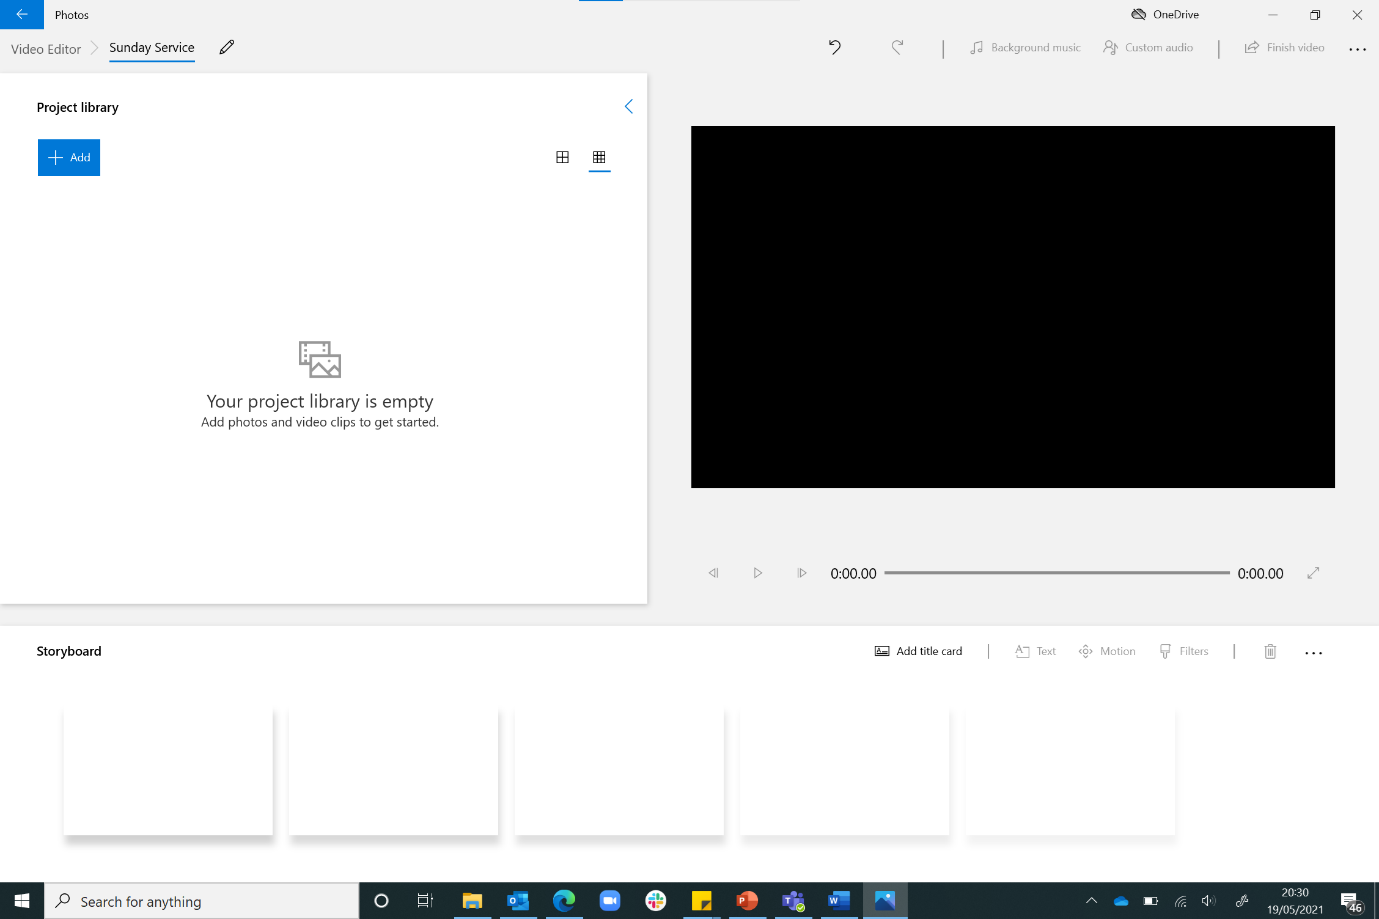 Windows Video Editor dashboard